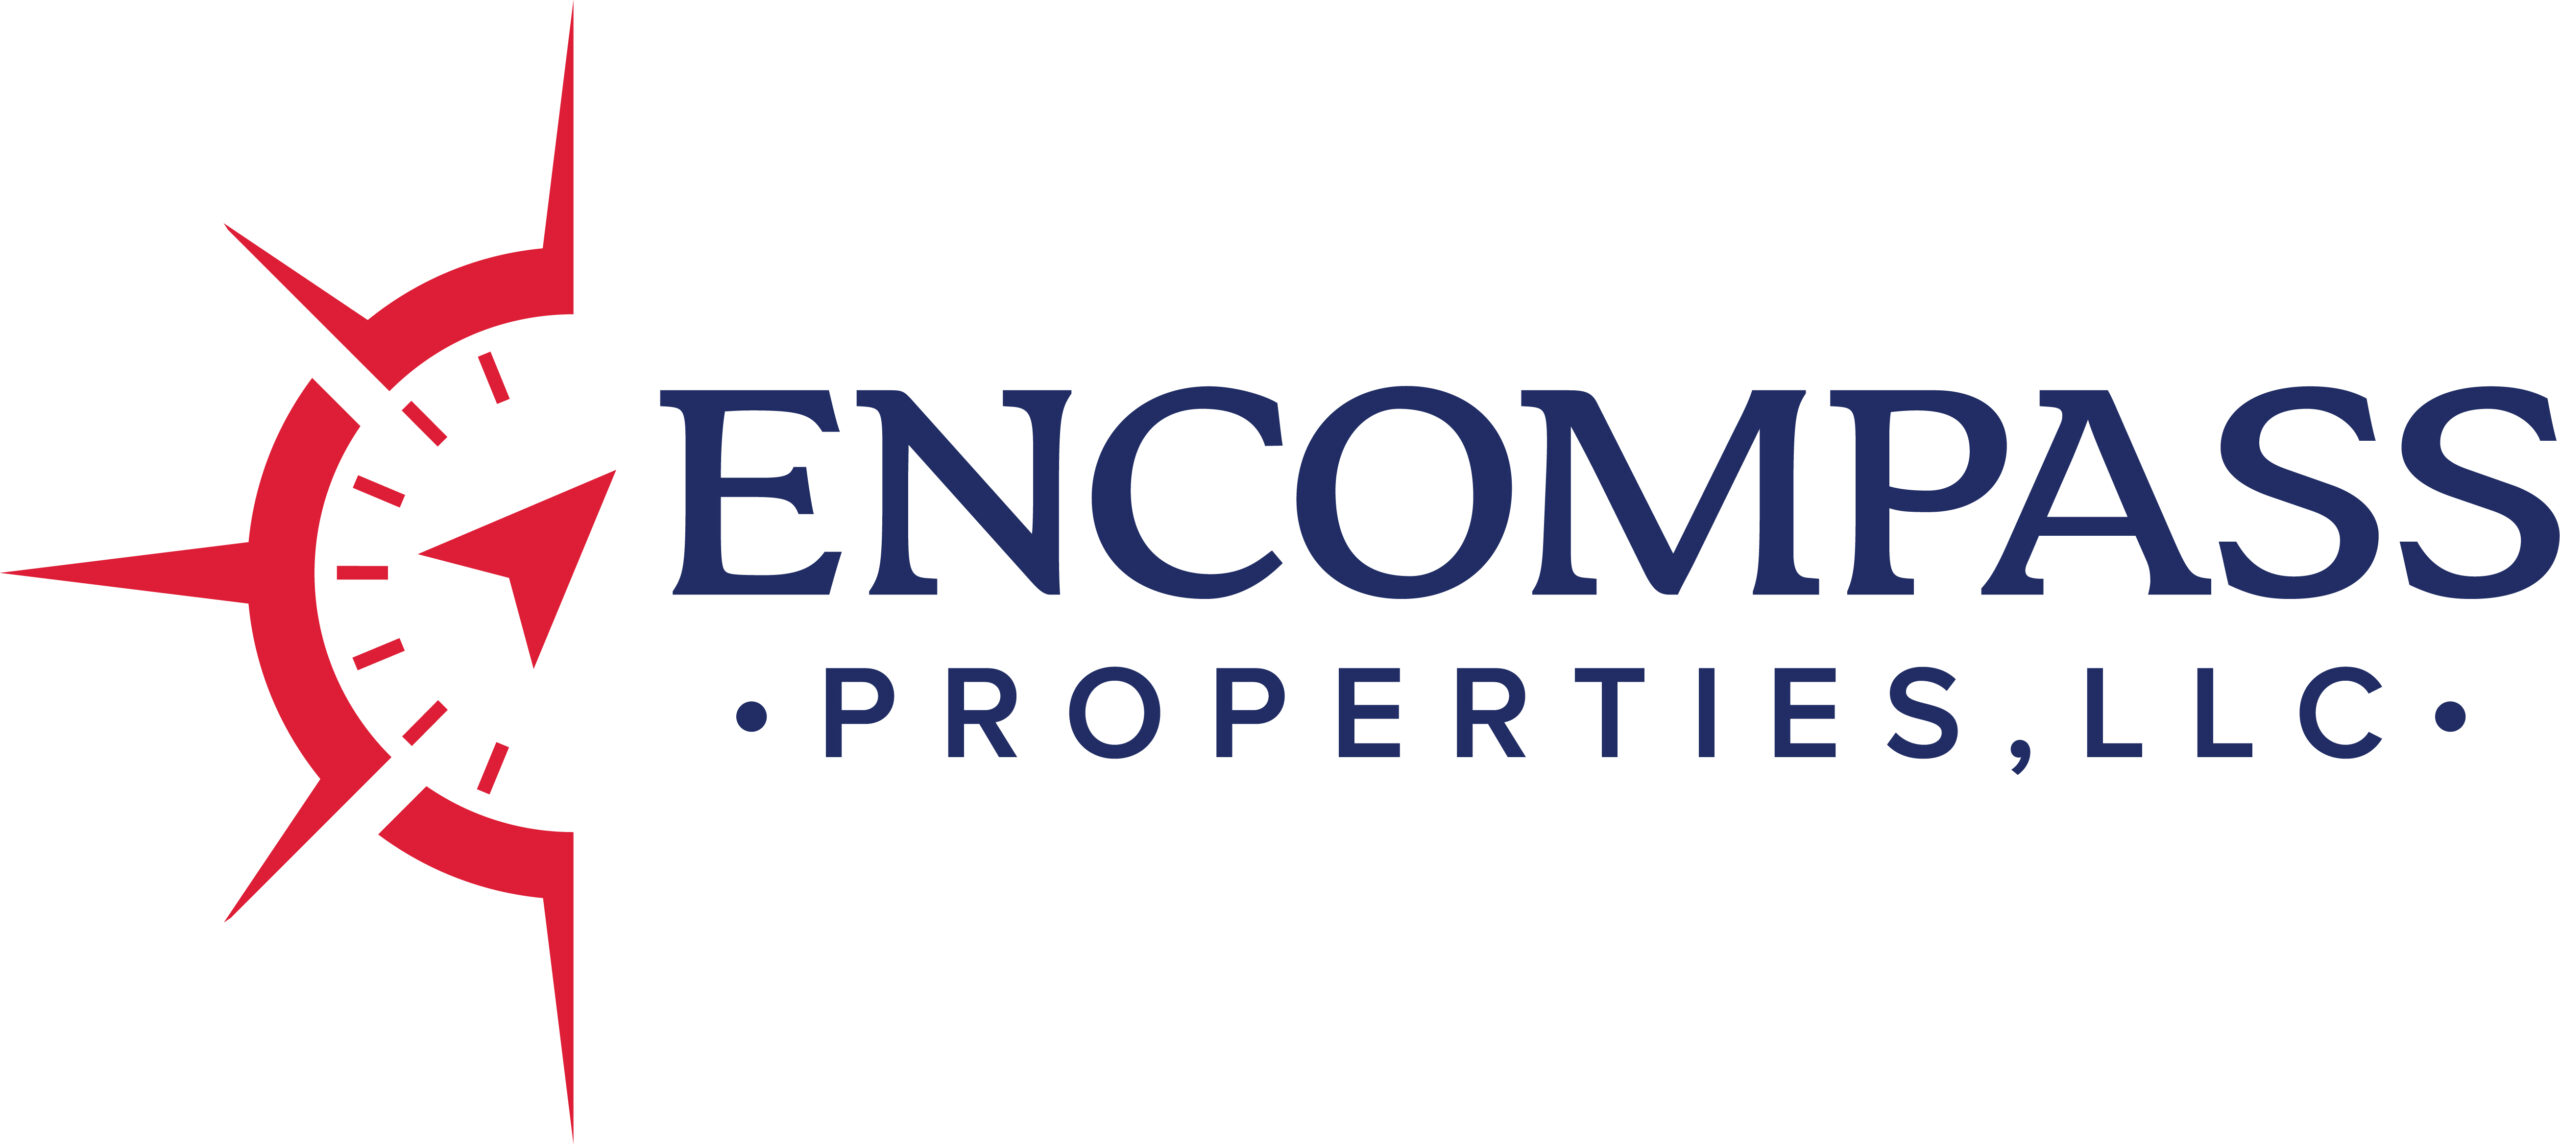 Encompass Properties LLC